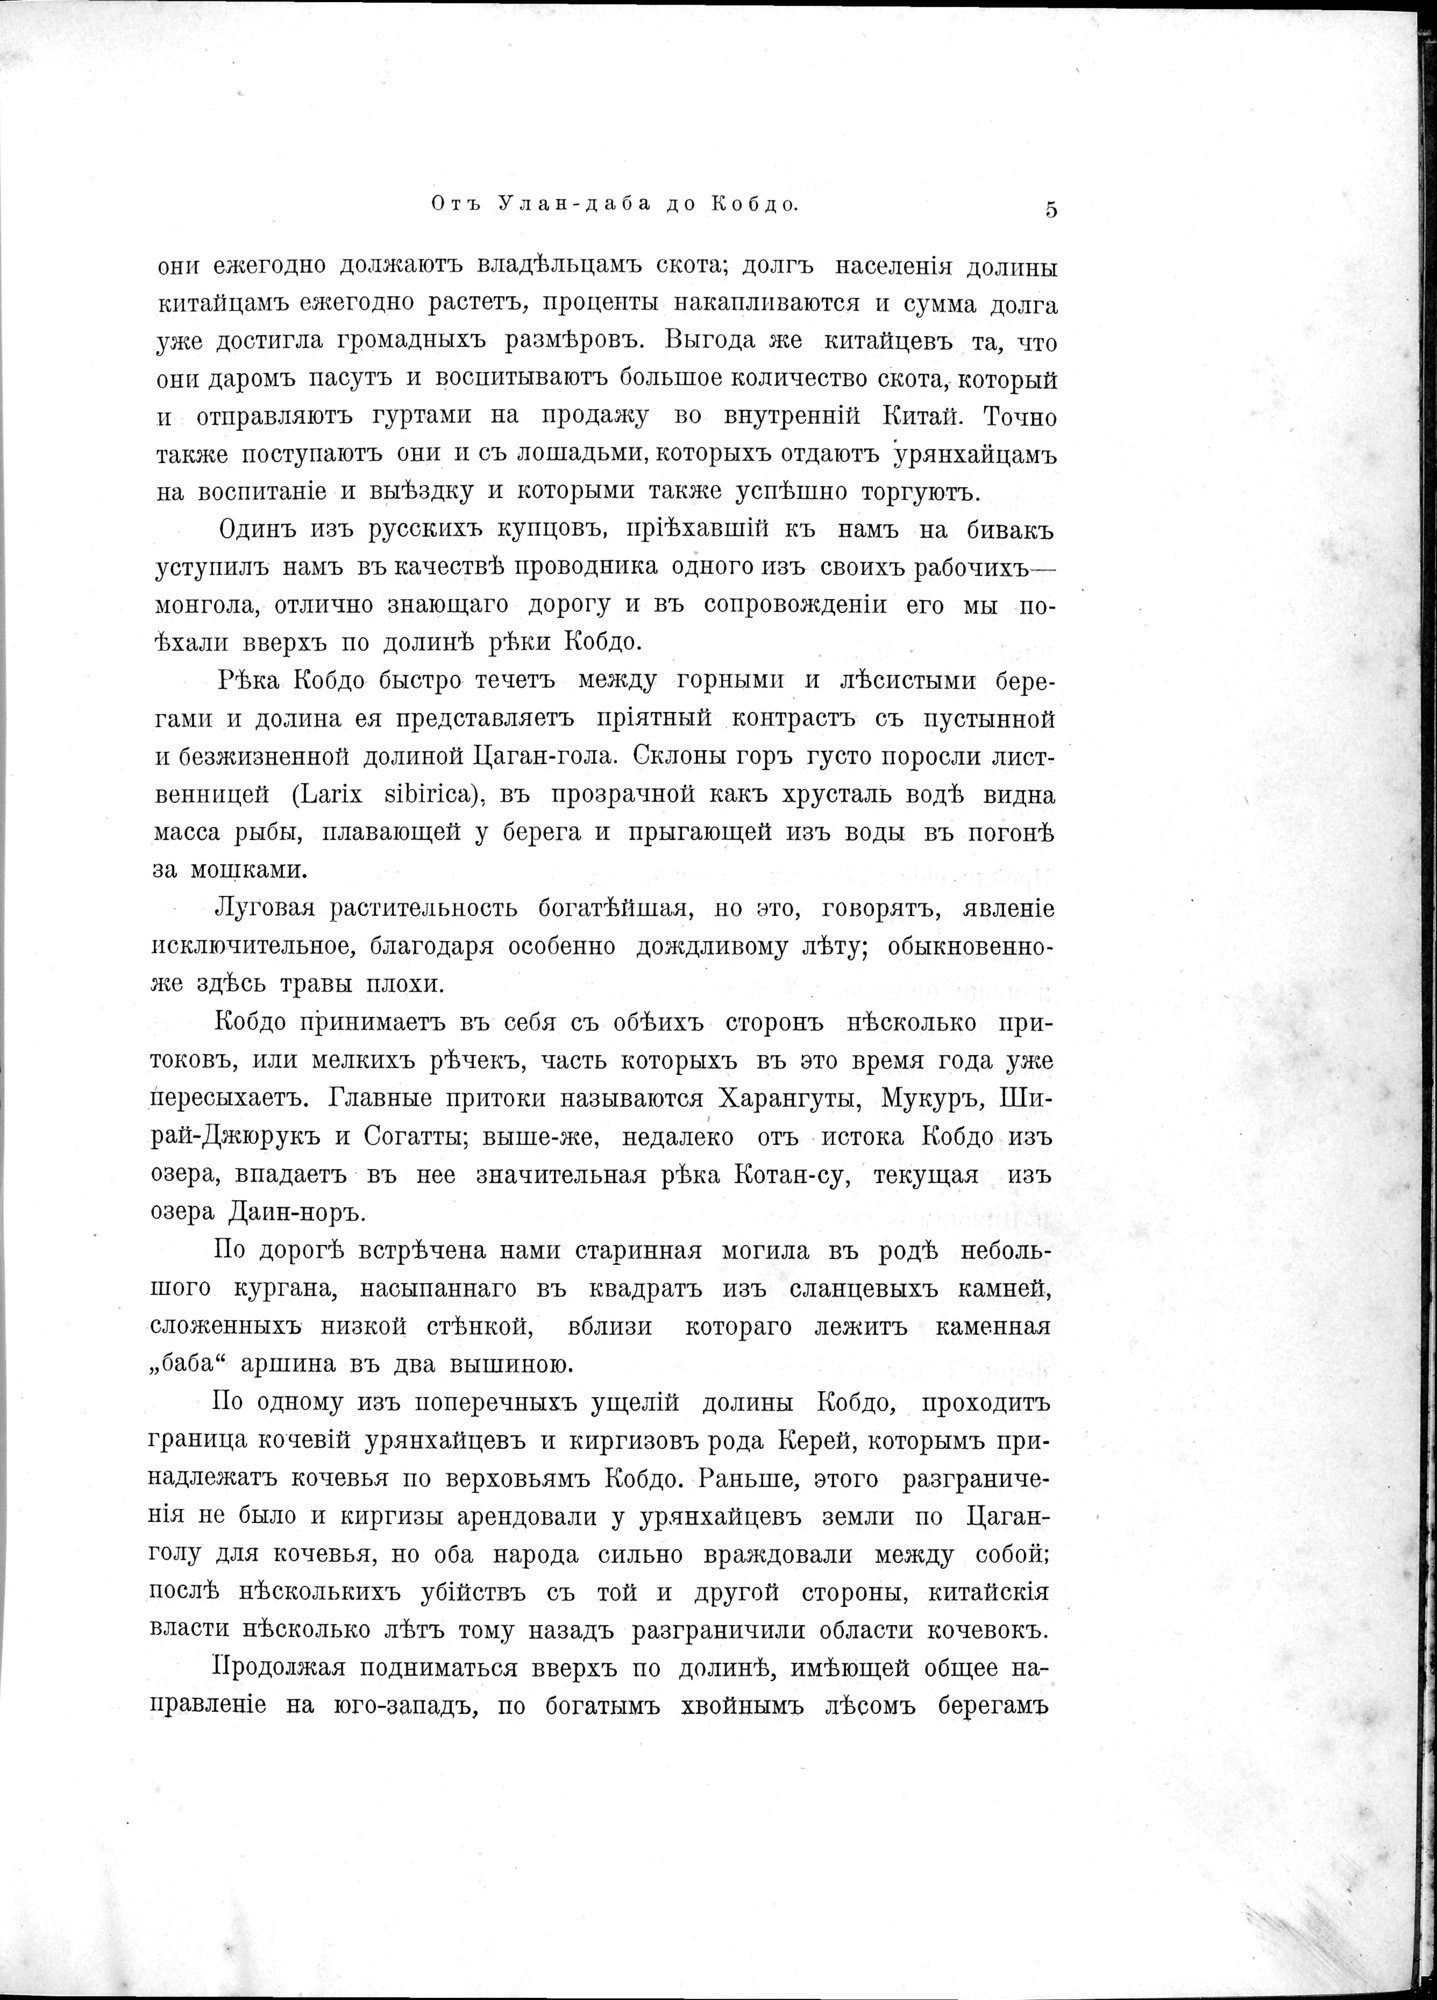 Mongoliia i Kam : vol.3 / Page 25 (Grayscale High Resolution Image)